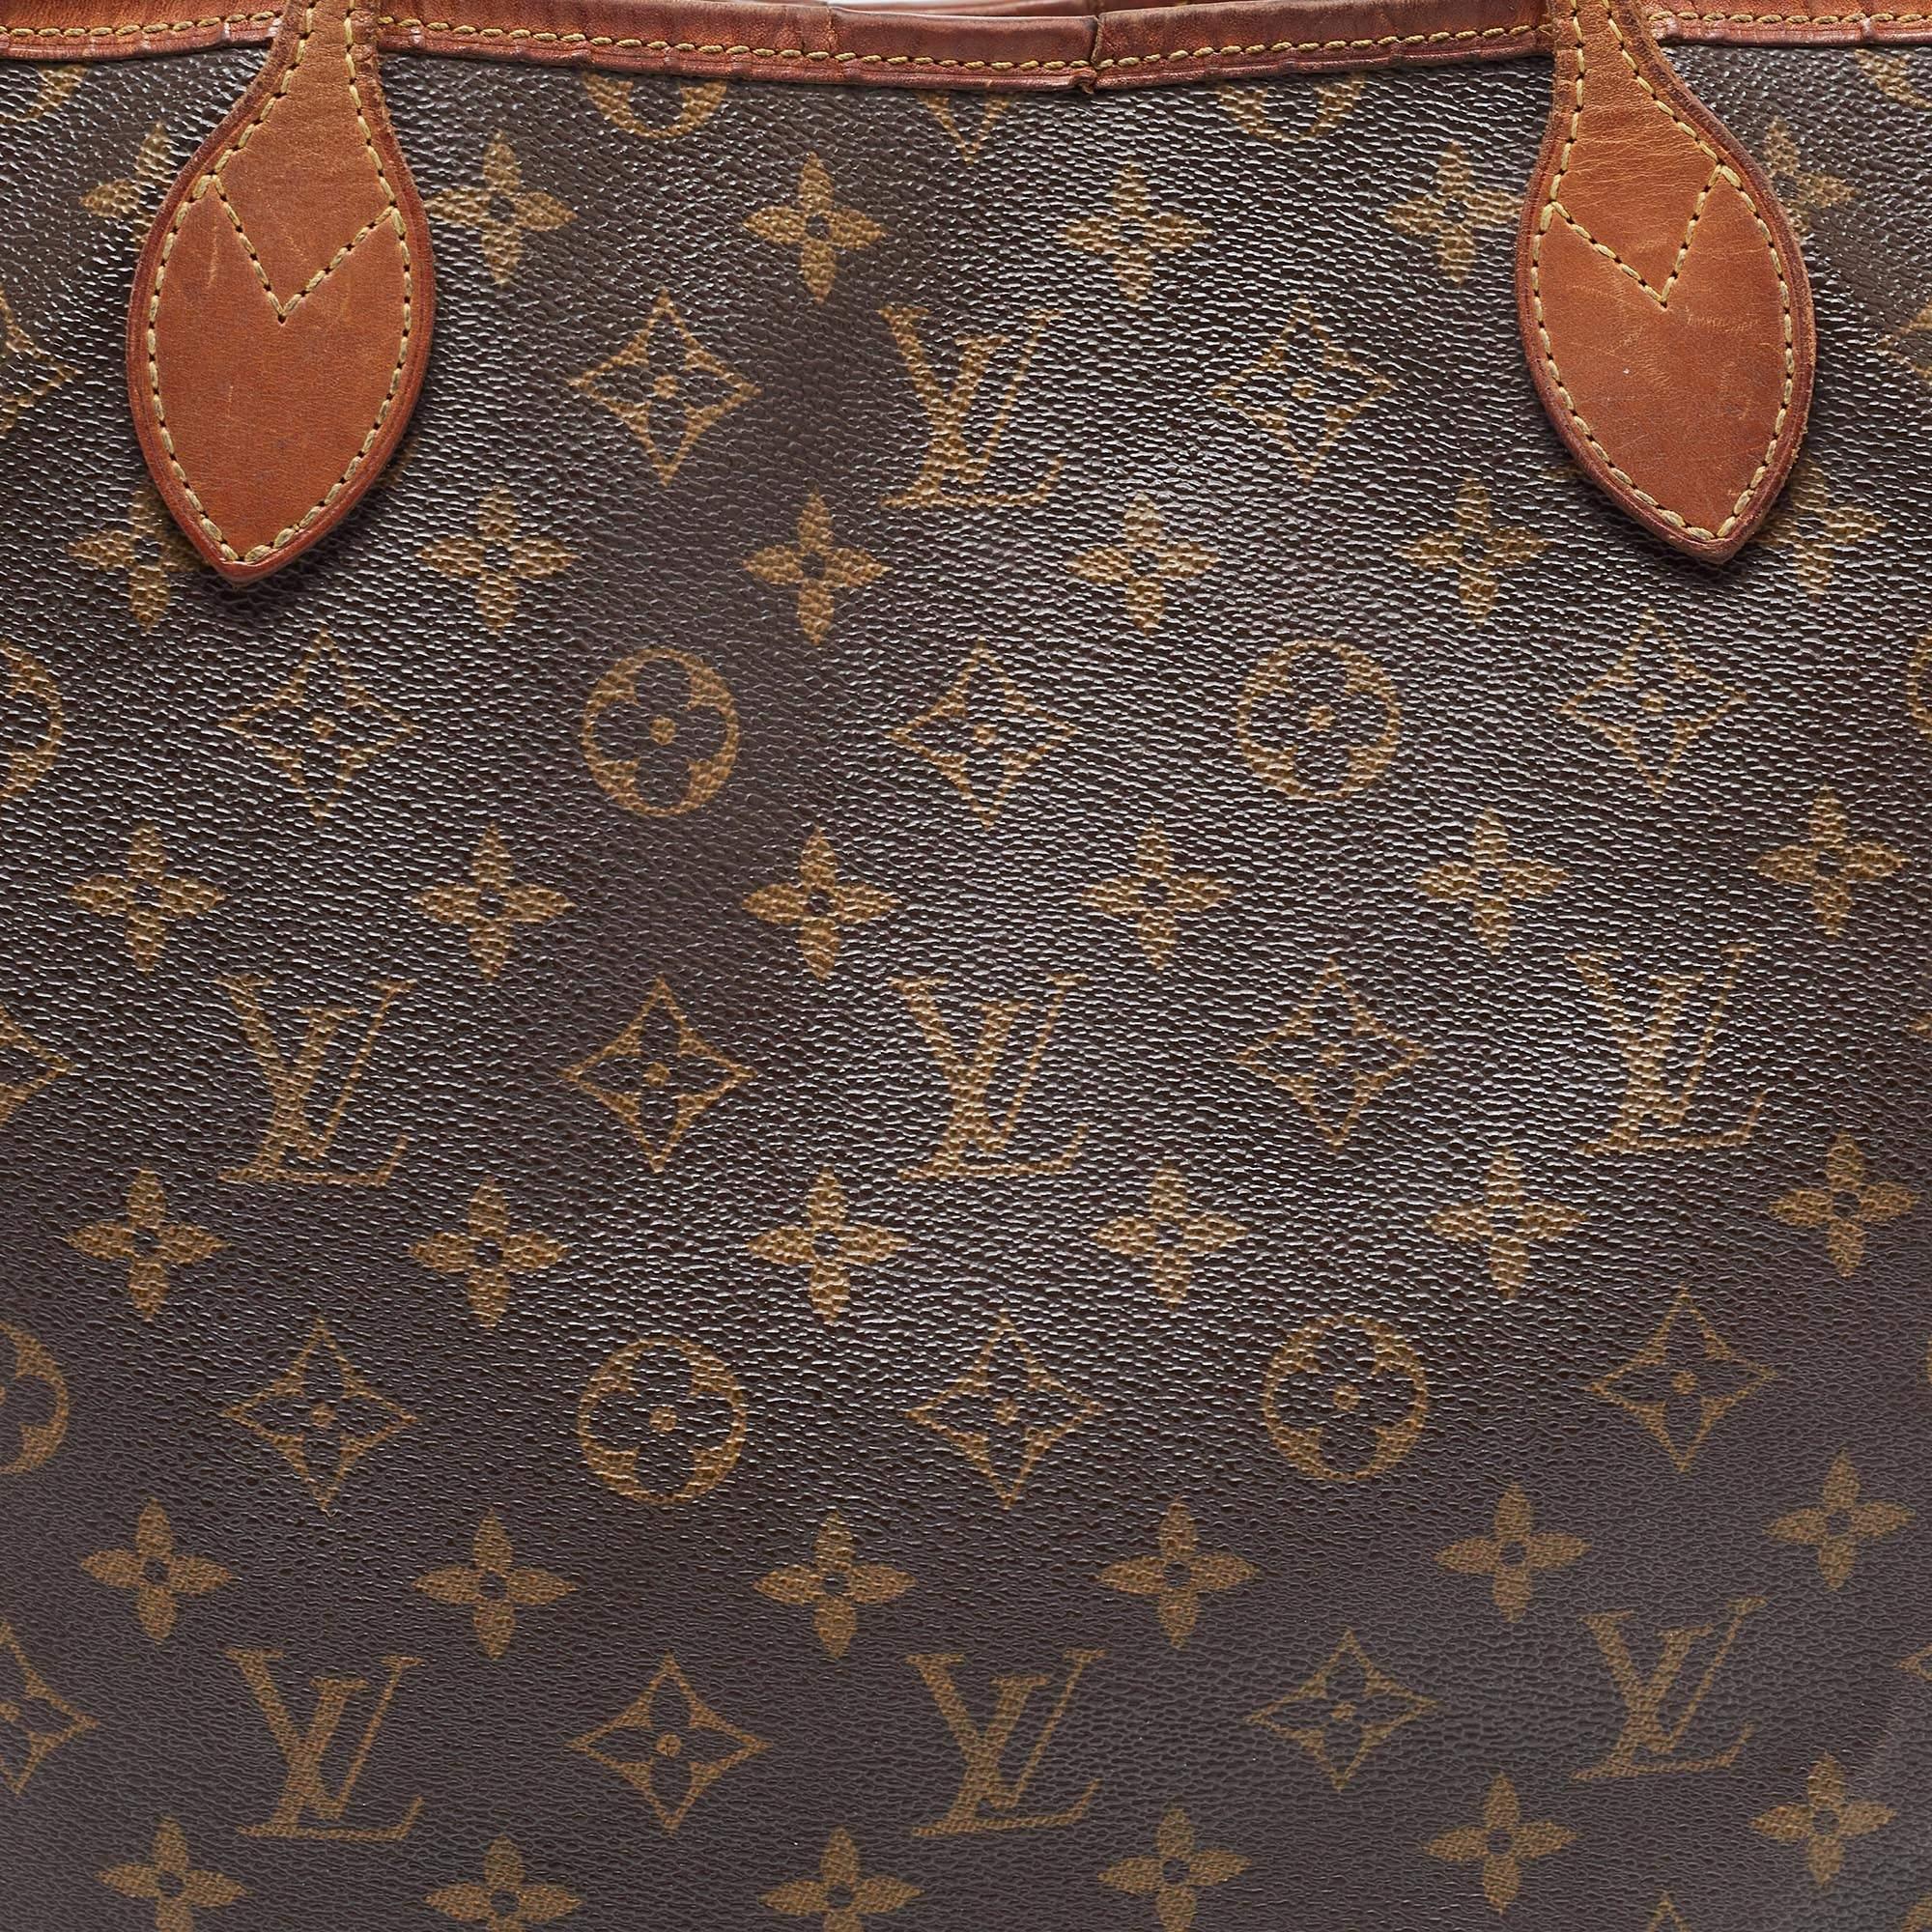 Louis Vuitton Monogram Canvas Neverfull GM Bag 6